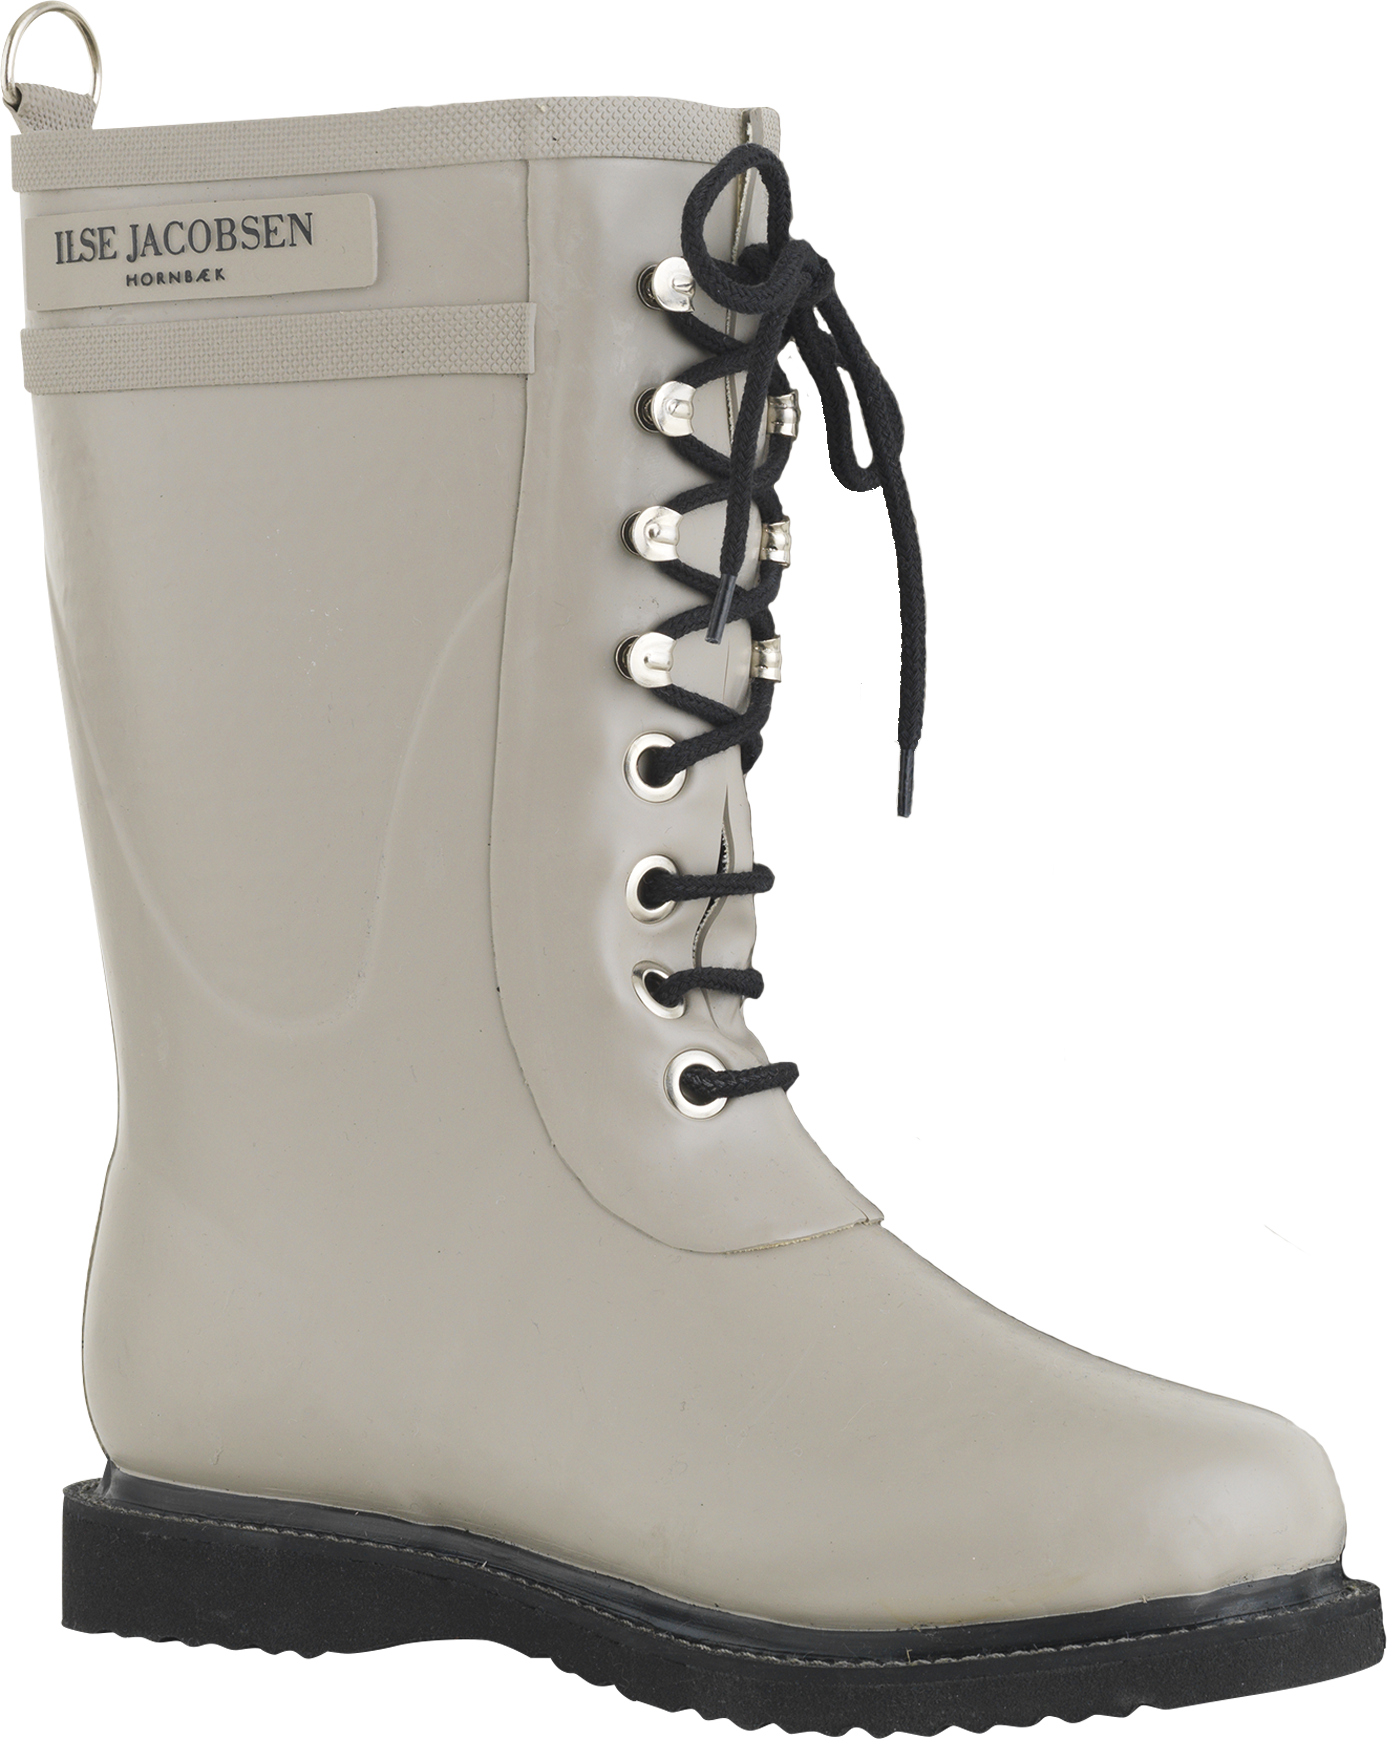 Ilse Jacobsen Women’s 3/4 Rubber Boots Atmosphere